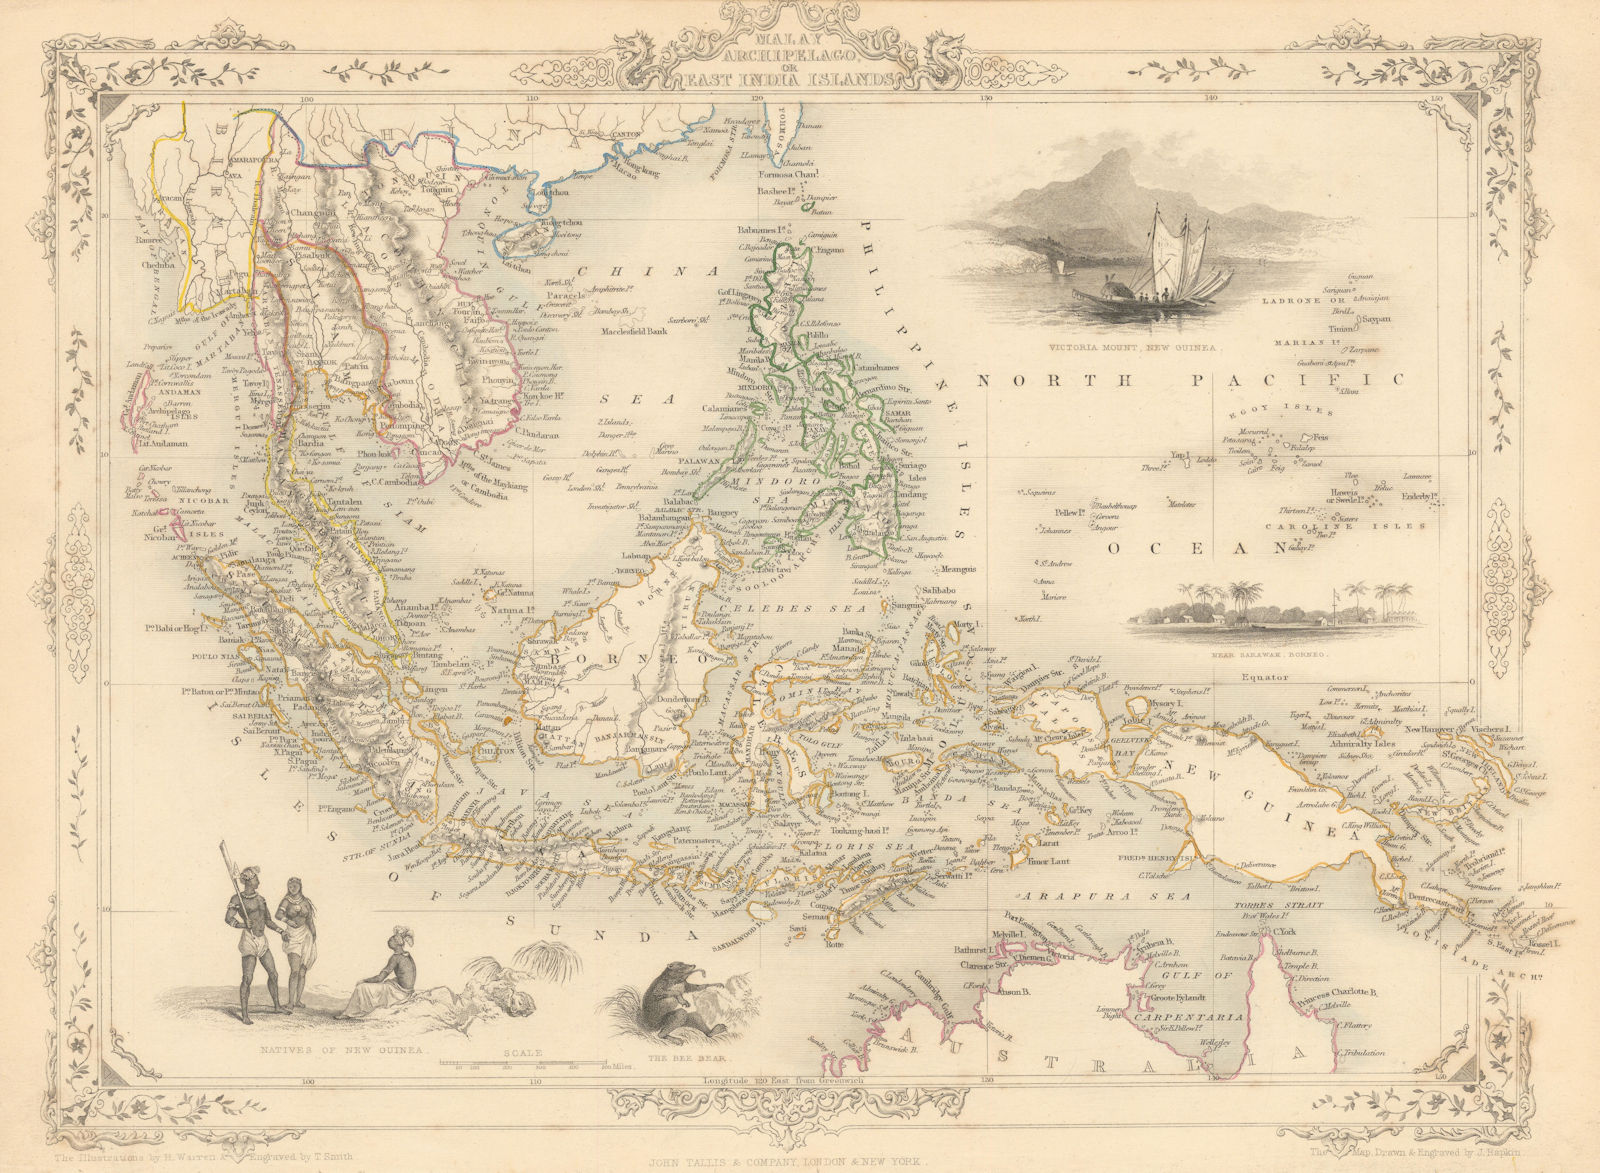 MALAY ARCHIPELAGO/EAST INDIA ISLANDS. Philippines Indies. RAPKIN/TALLIS 1851 map